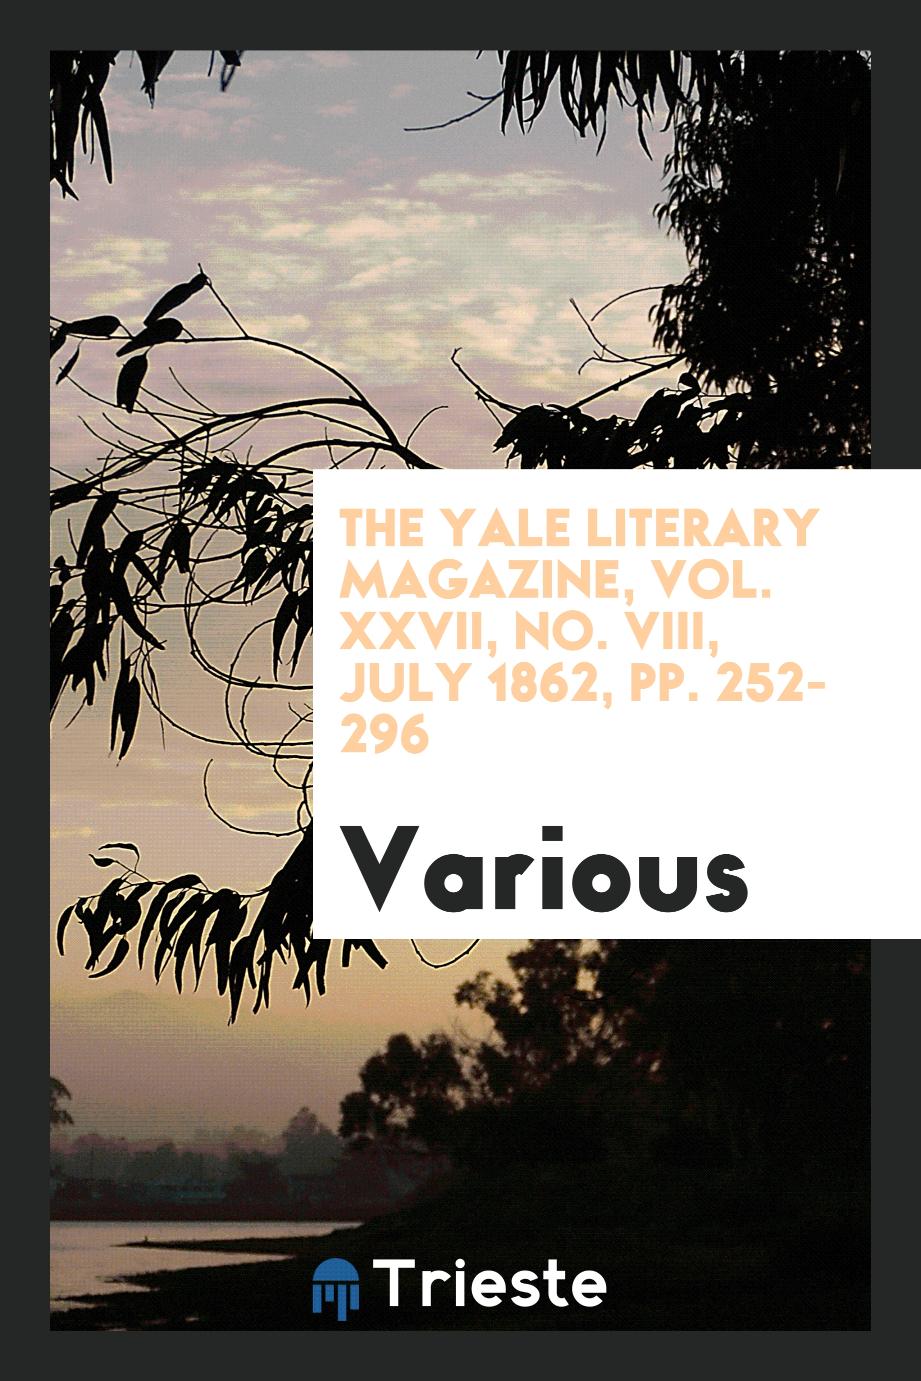 The Yale literary magazine, Vol. XXVII, No. VIII, July 1862, pp. 252- 296